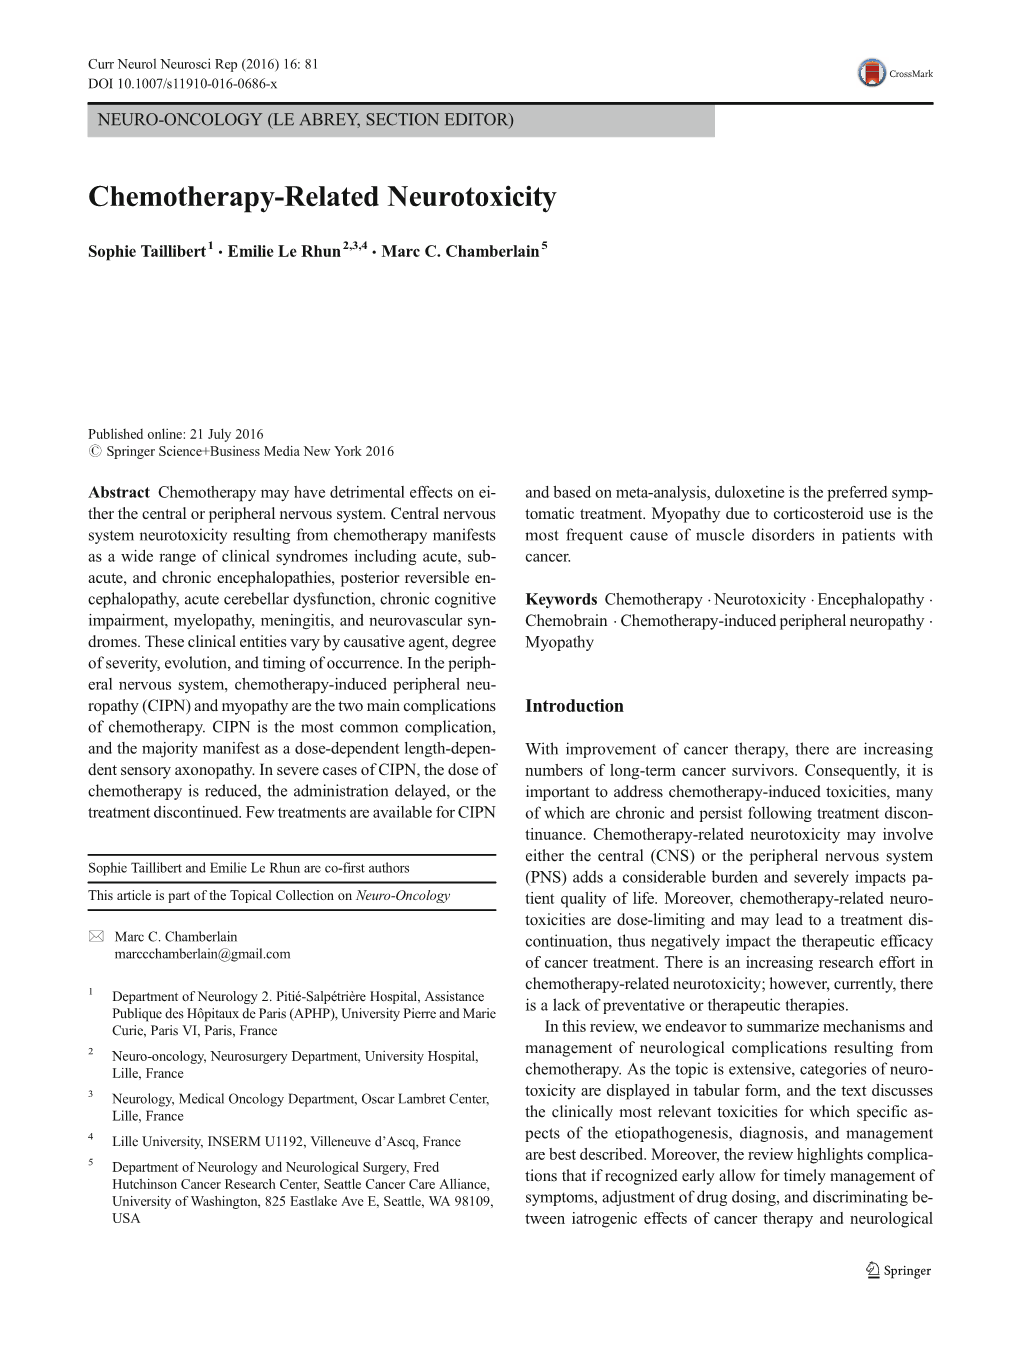 Chemotherapy-Related Neurotoxicity